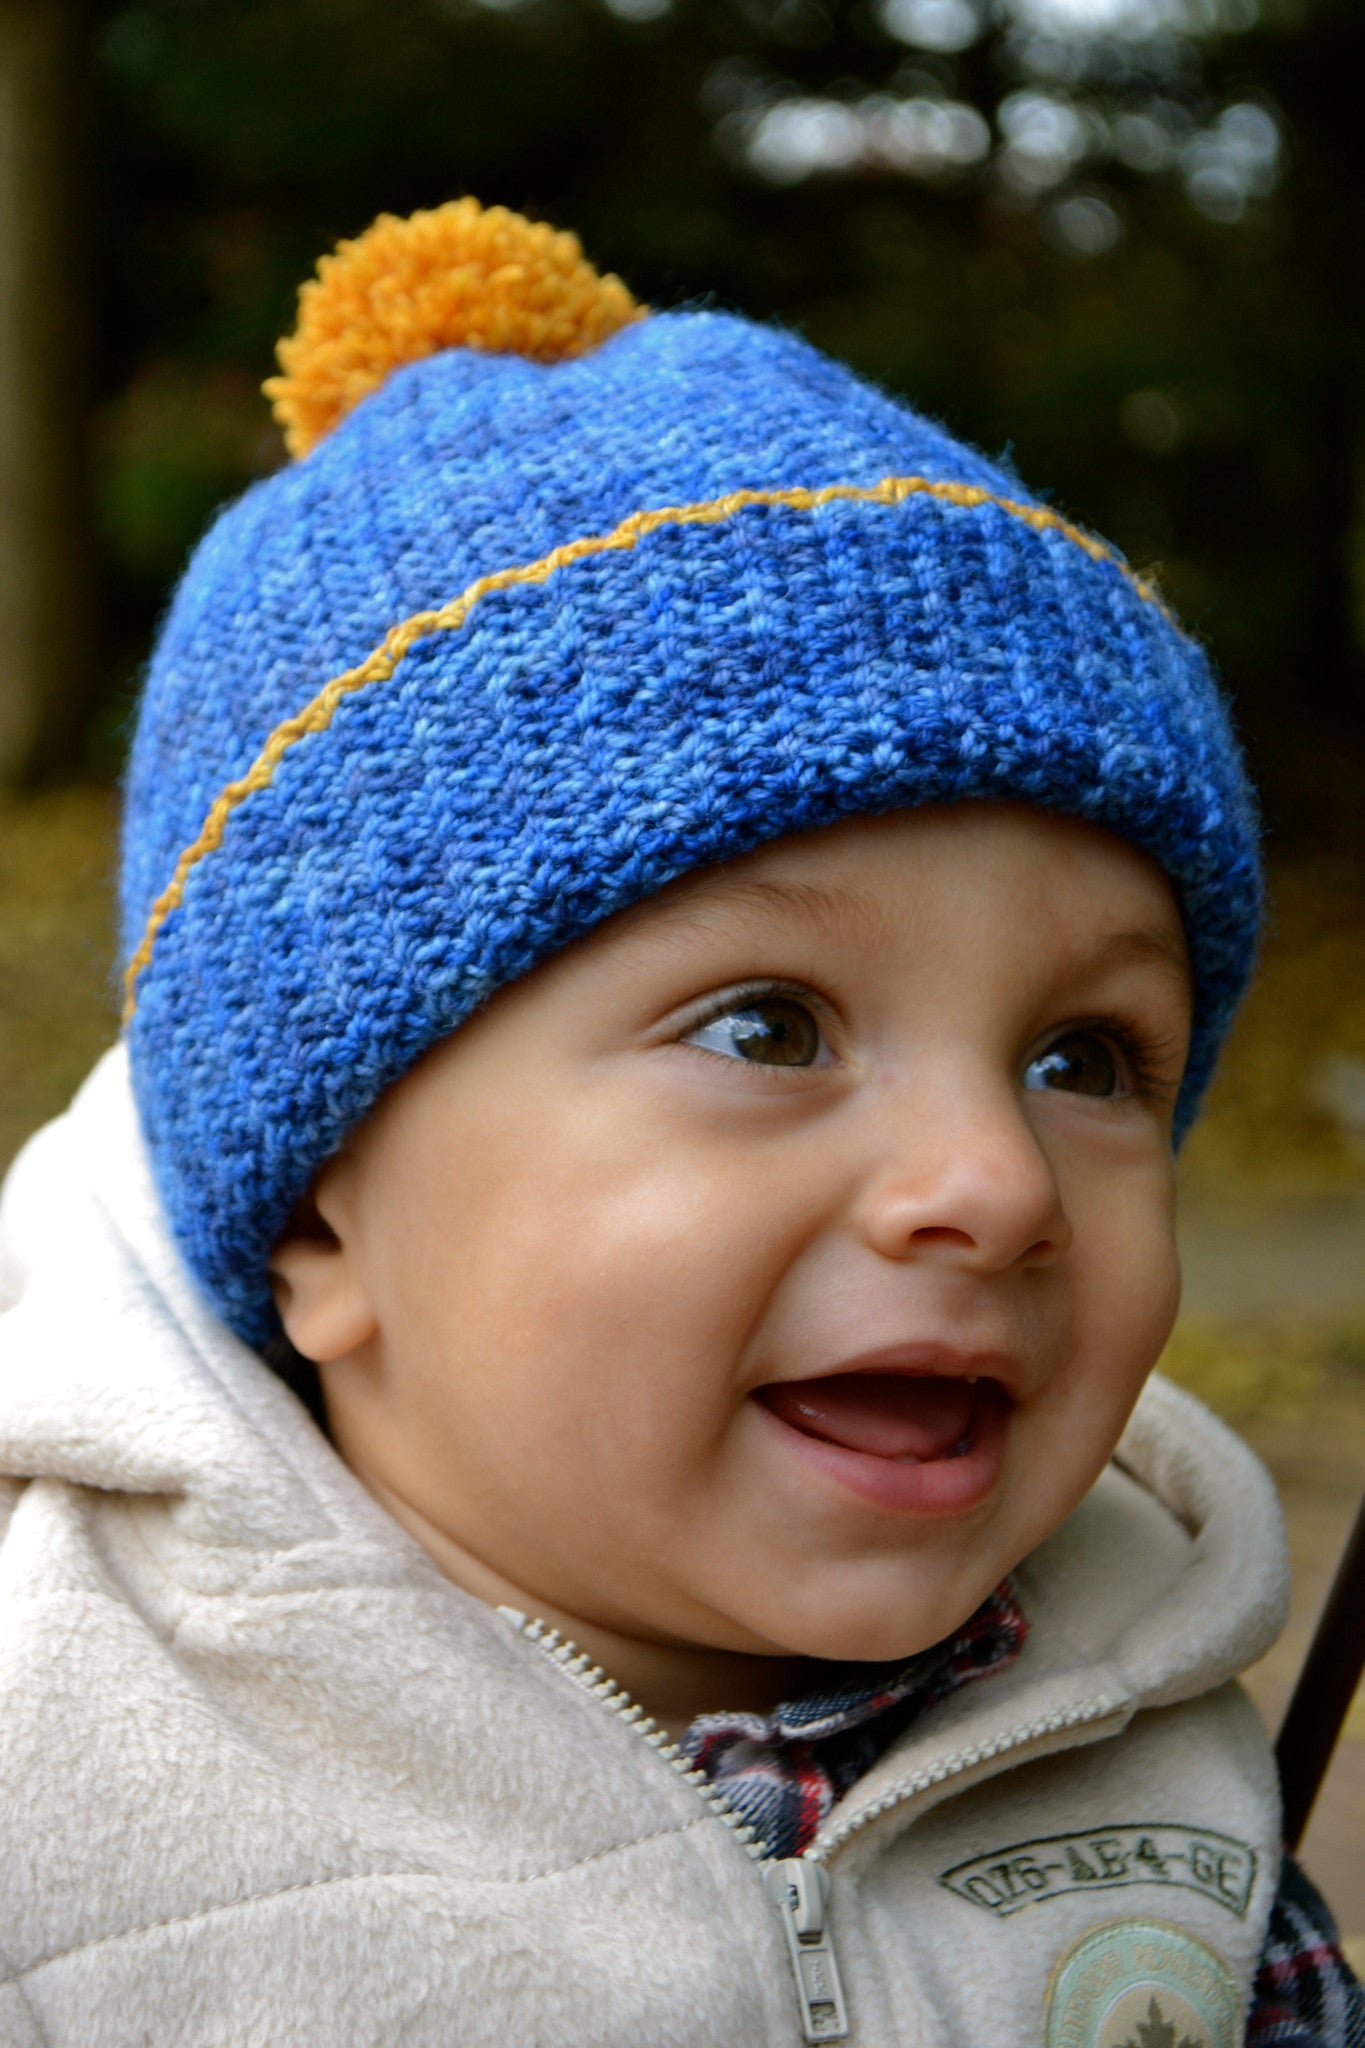 Petit Henri crochet hat shown in 0-6 month size